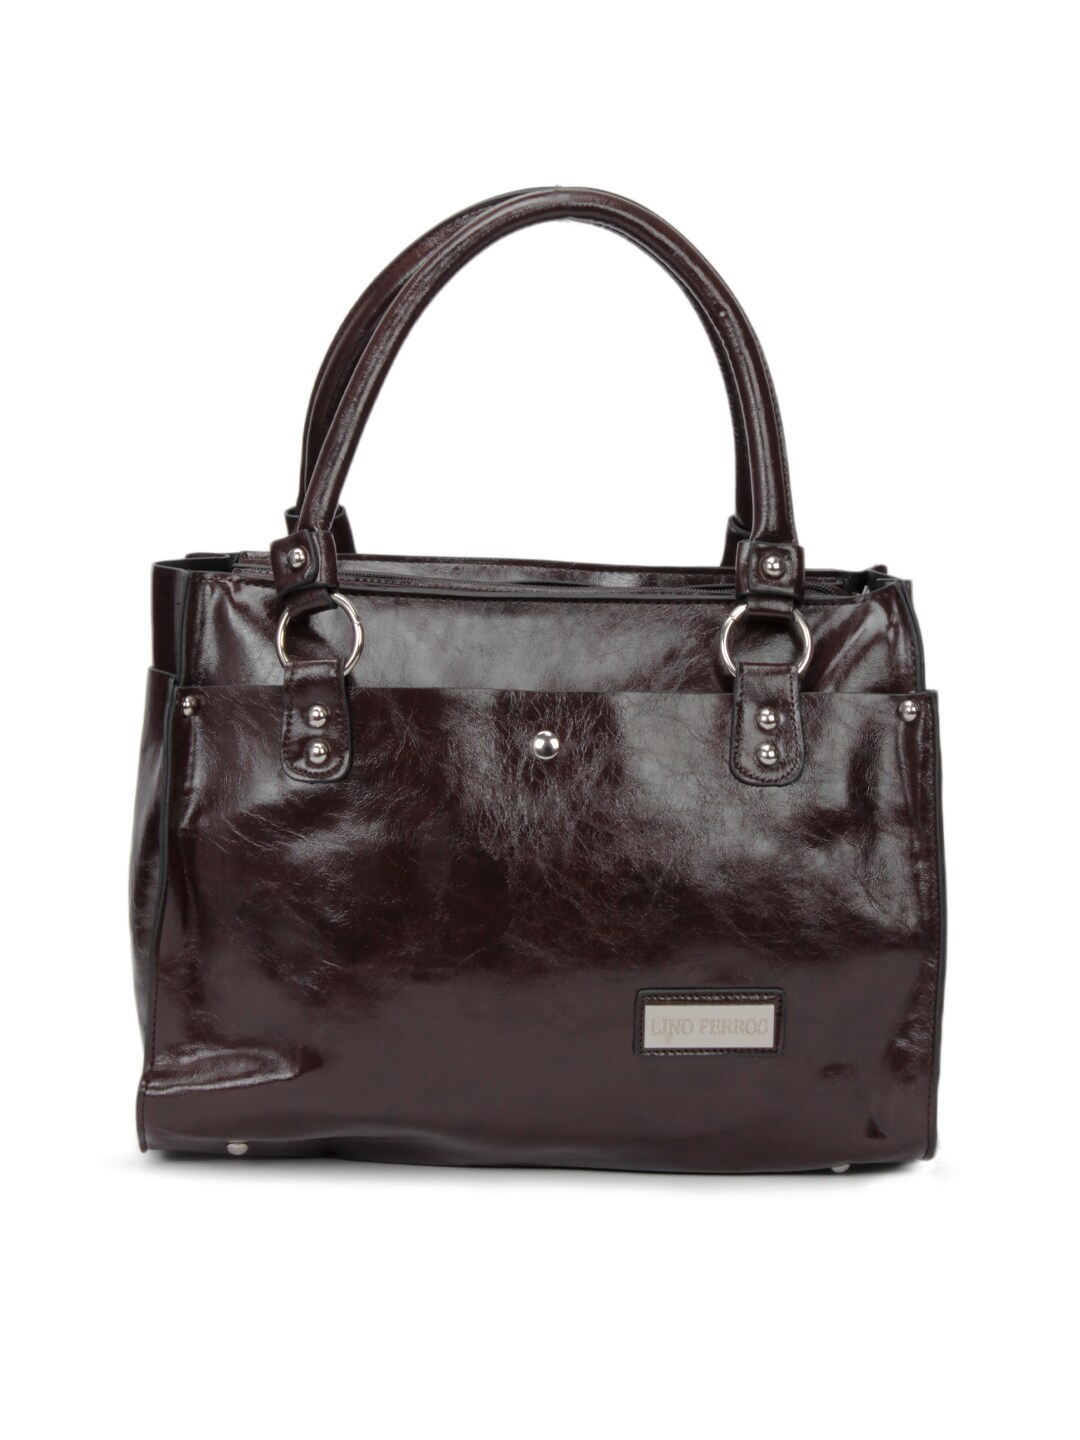 Lino Perros Women Leatherette Brown Handbag